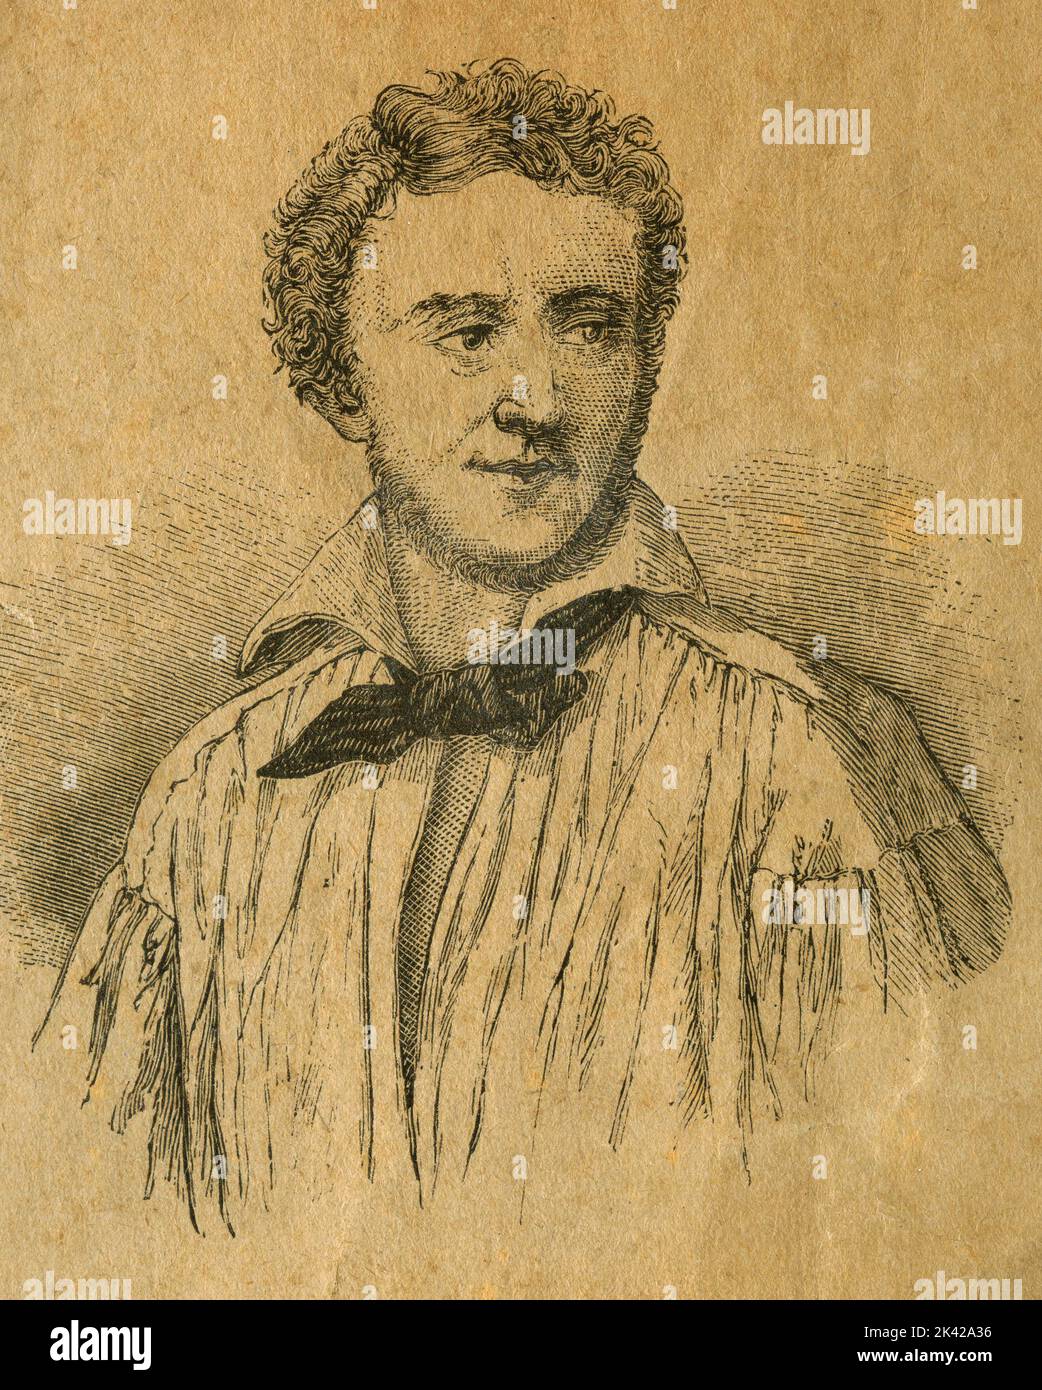 Portrait of Italian patriot Ciro Menotti, illustration 1830s Stock Photo